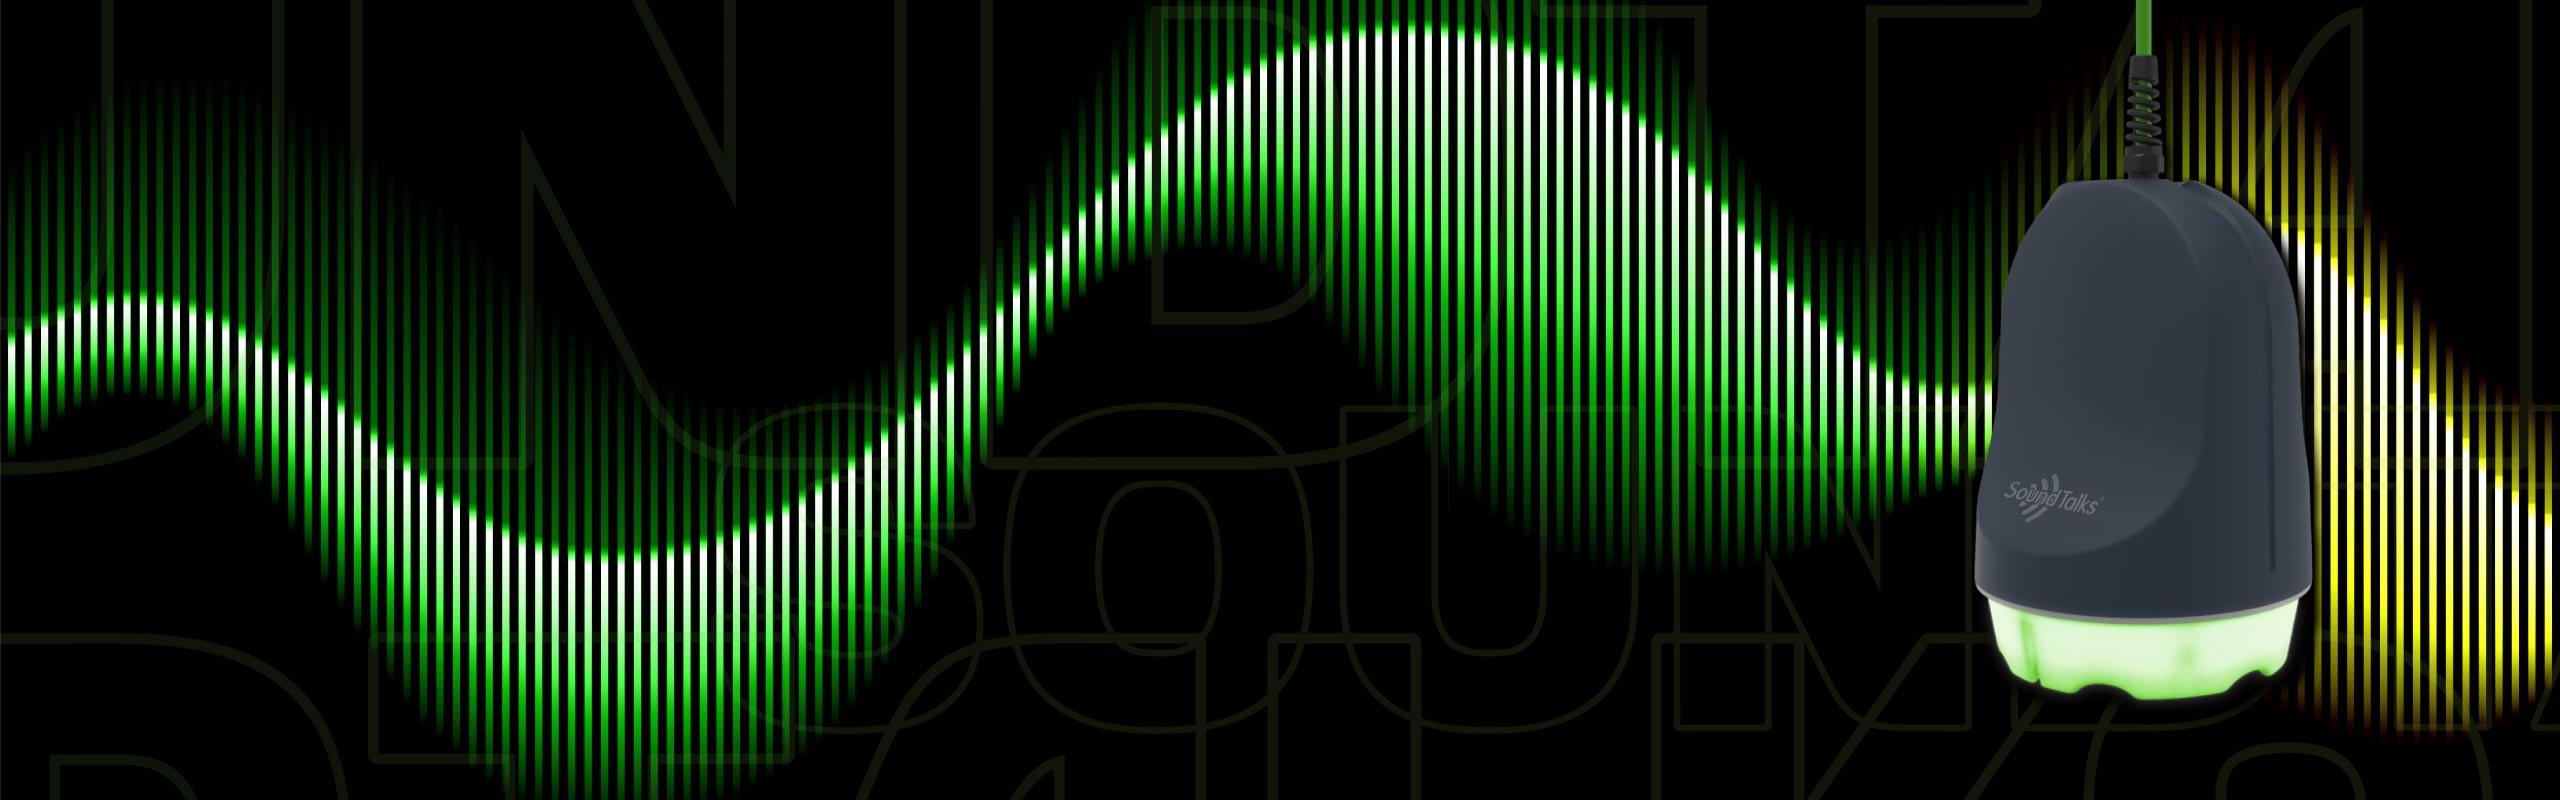 SoundTalks device lighting up in green